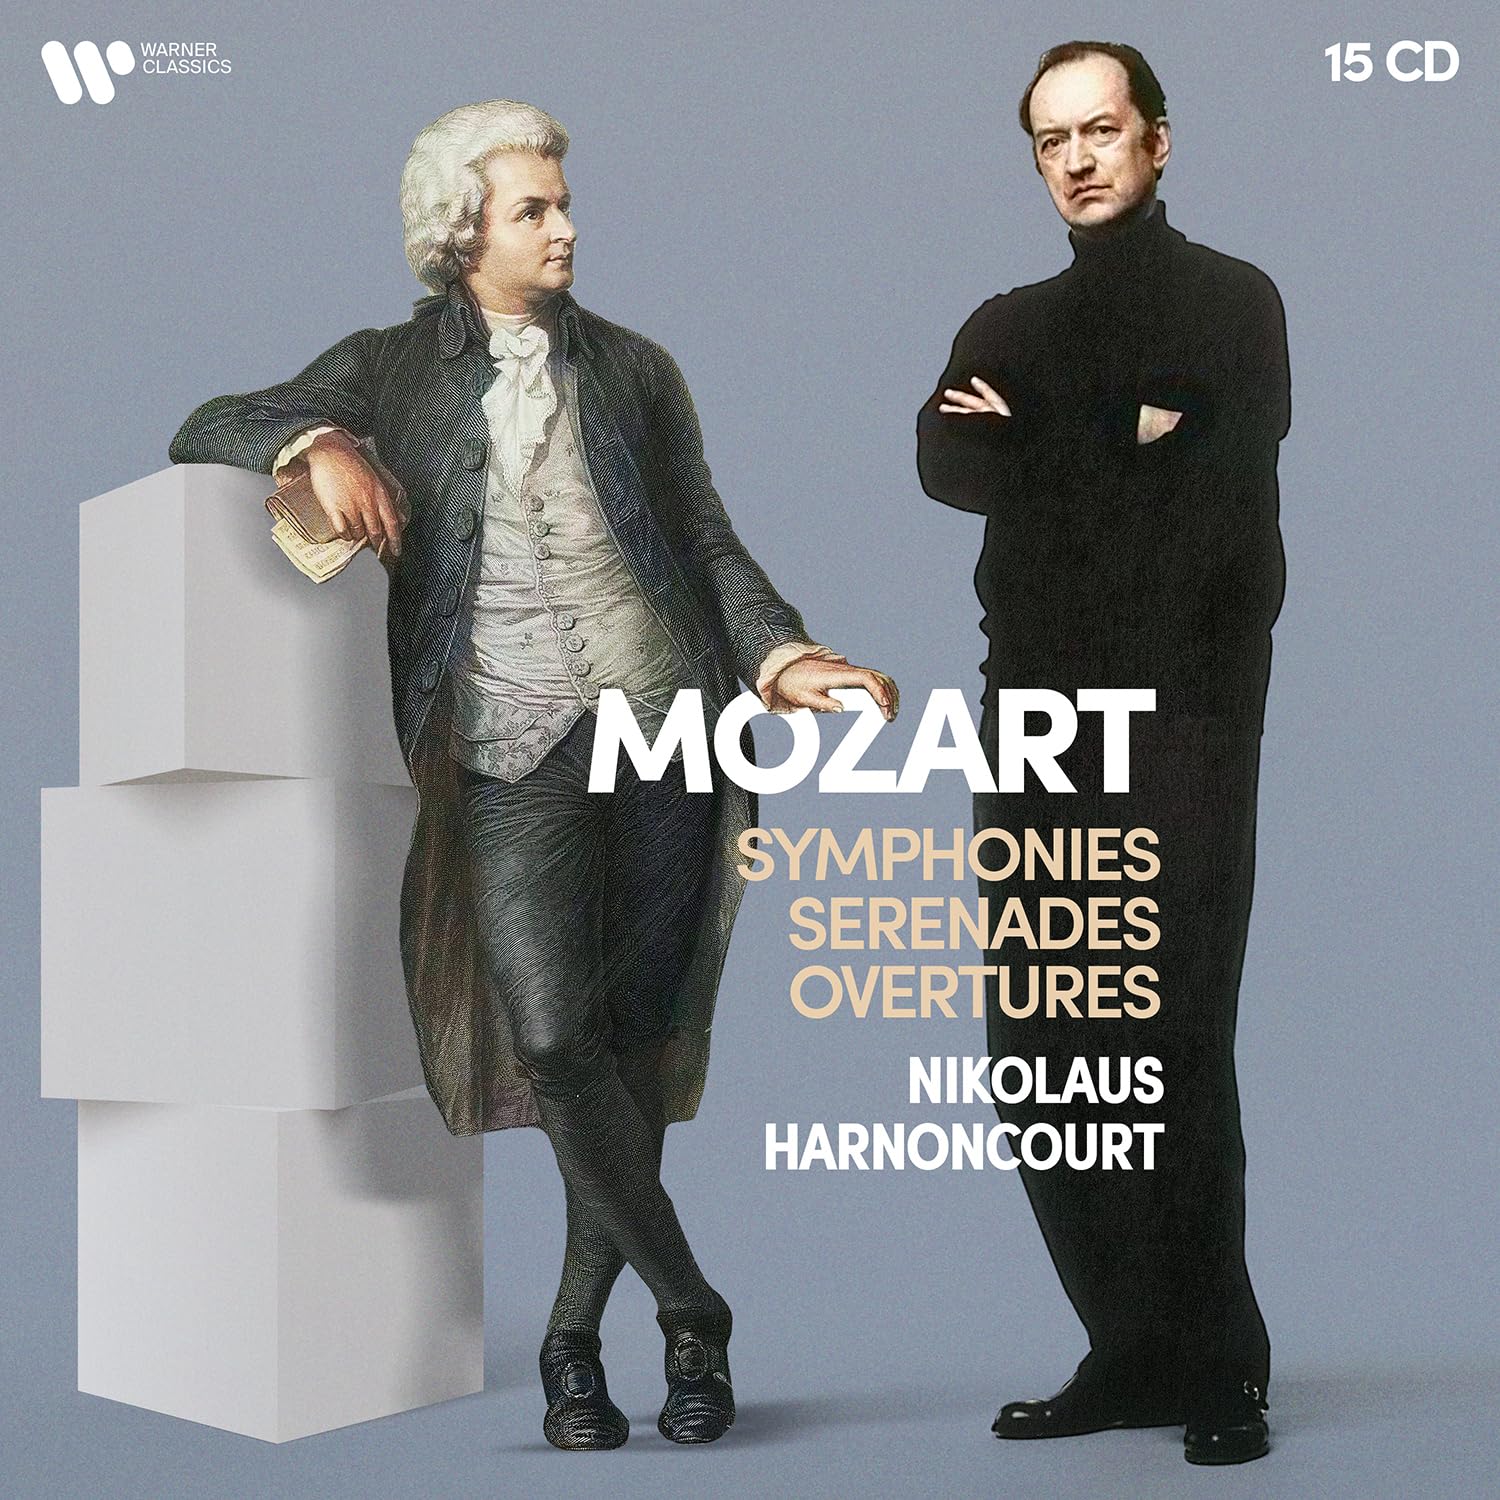 Audio Cd Wolfgang Amadeus Mozart - Symphonies Serenades Overtures NUOVO SIGILLATO EDIZIONE DEL SUBITO DISPONIBILE